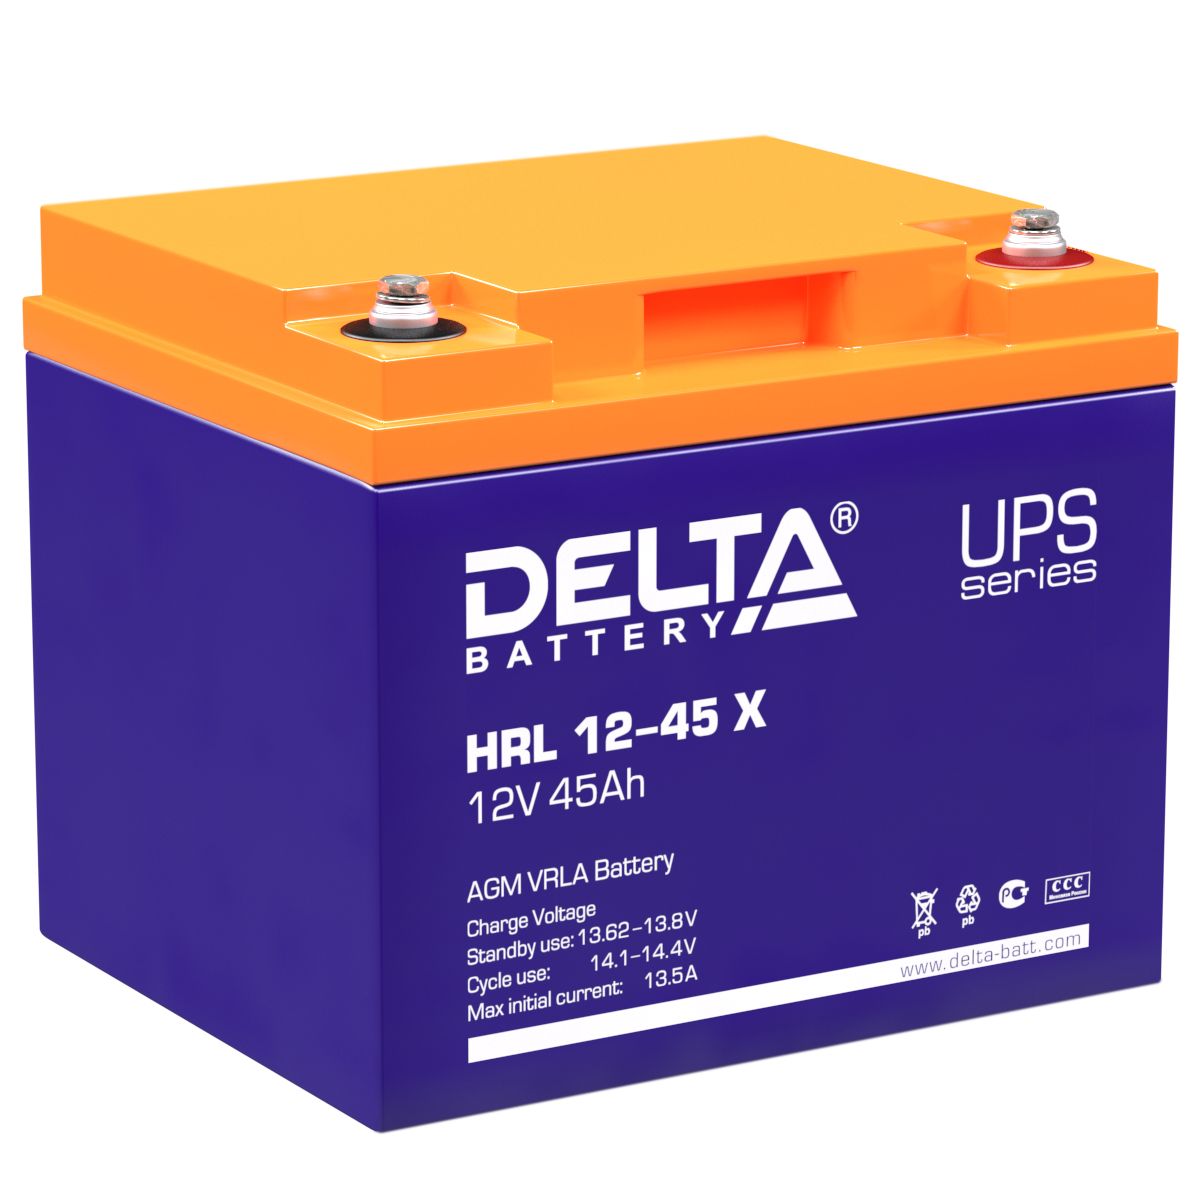 Аккумуляторная батарея Delta HRL 12-45 X